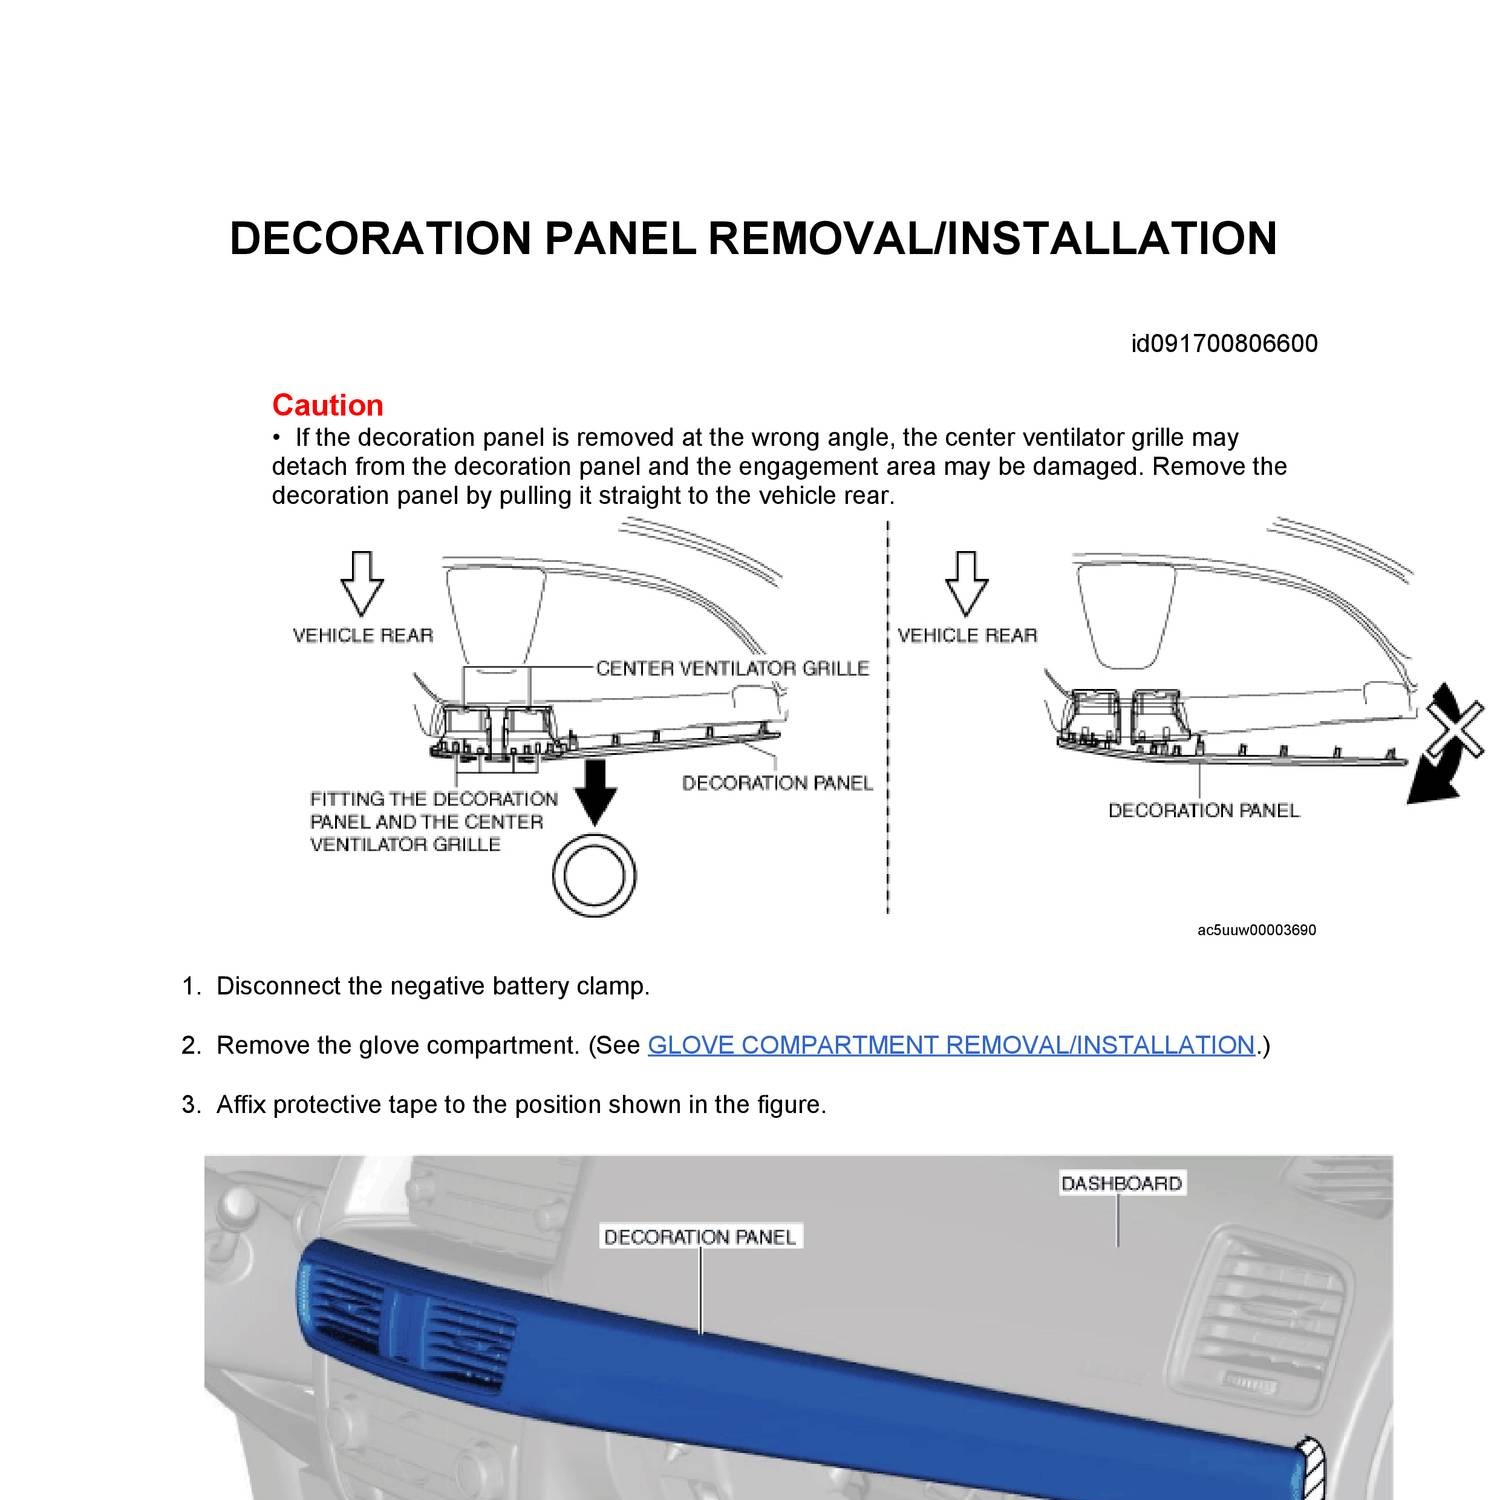 DECORATION PANEL REMOVAL.pdf | DocDroid